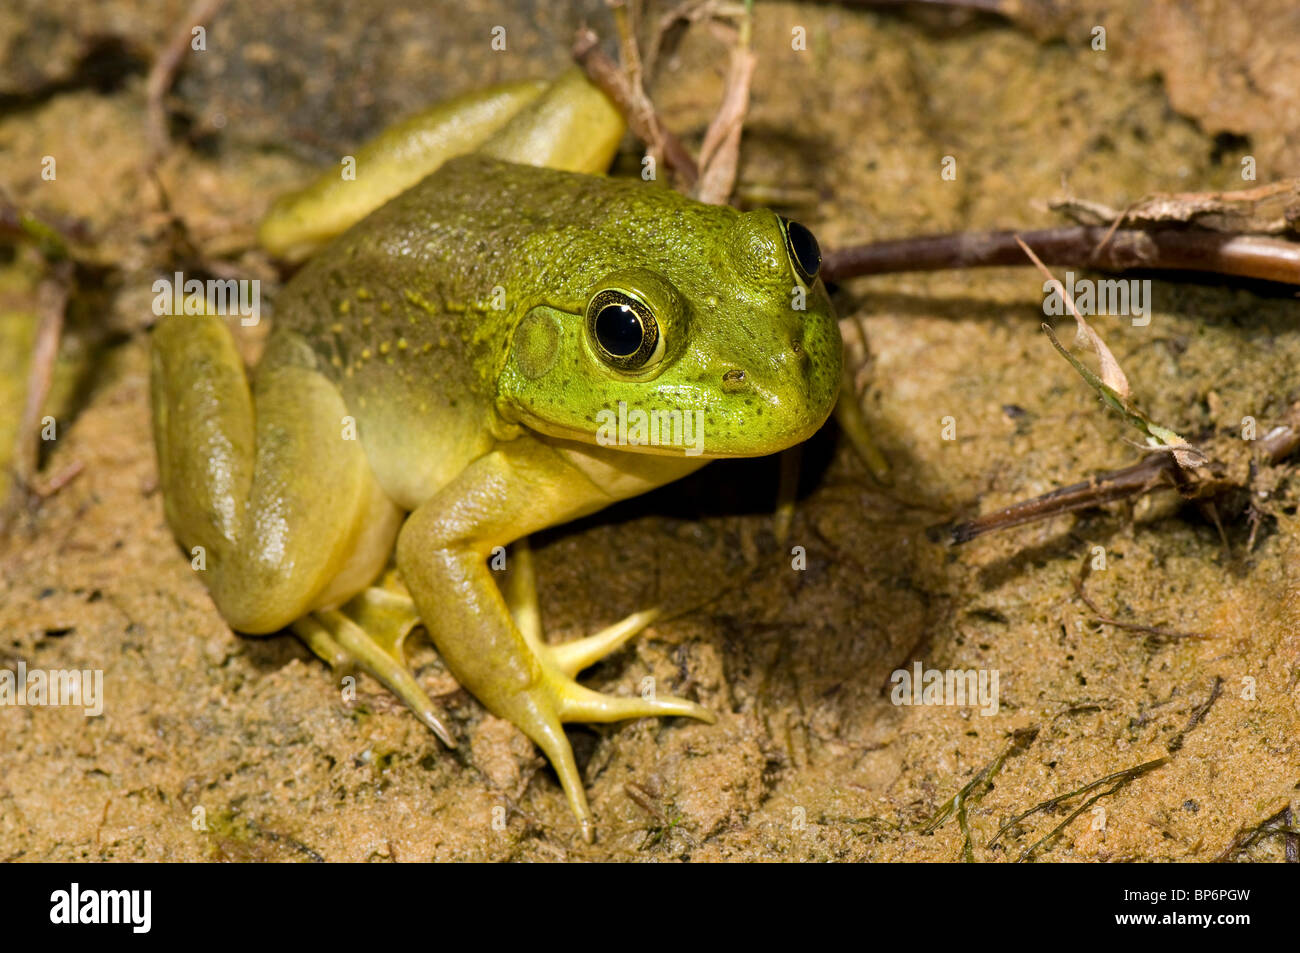 bullfrog, American bullfrog (Lithobates catesbeianus, Rana catesbeiana), adult, Greece, Creta Stock Photo